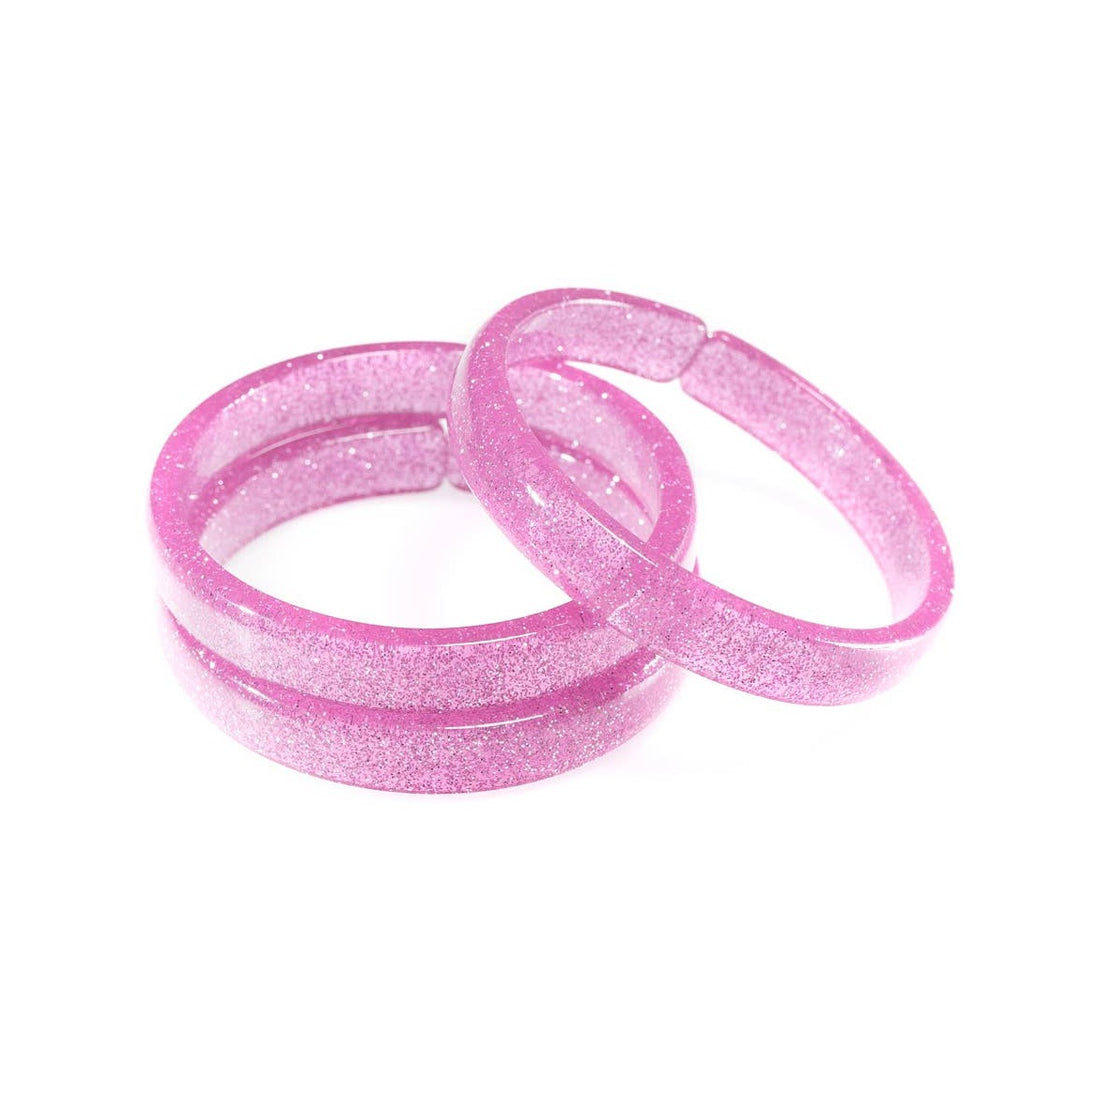 Light Pink Glitter Bangles - Set of 3